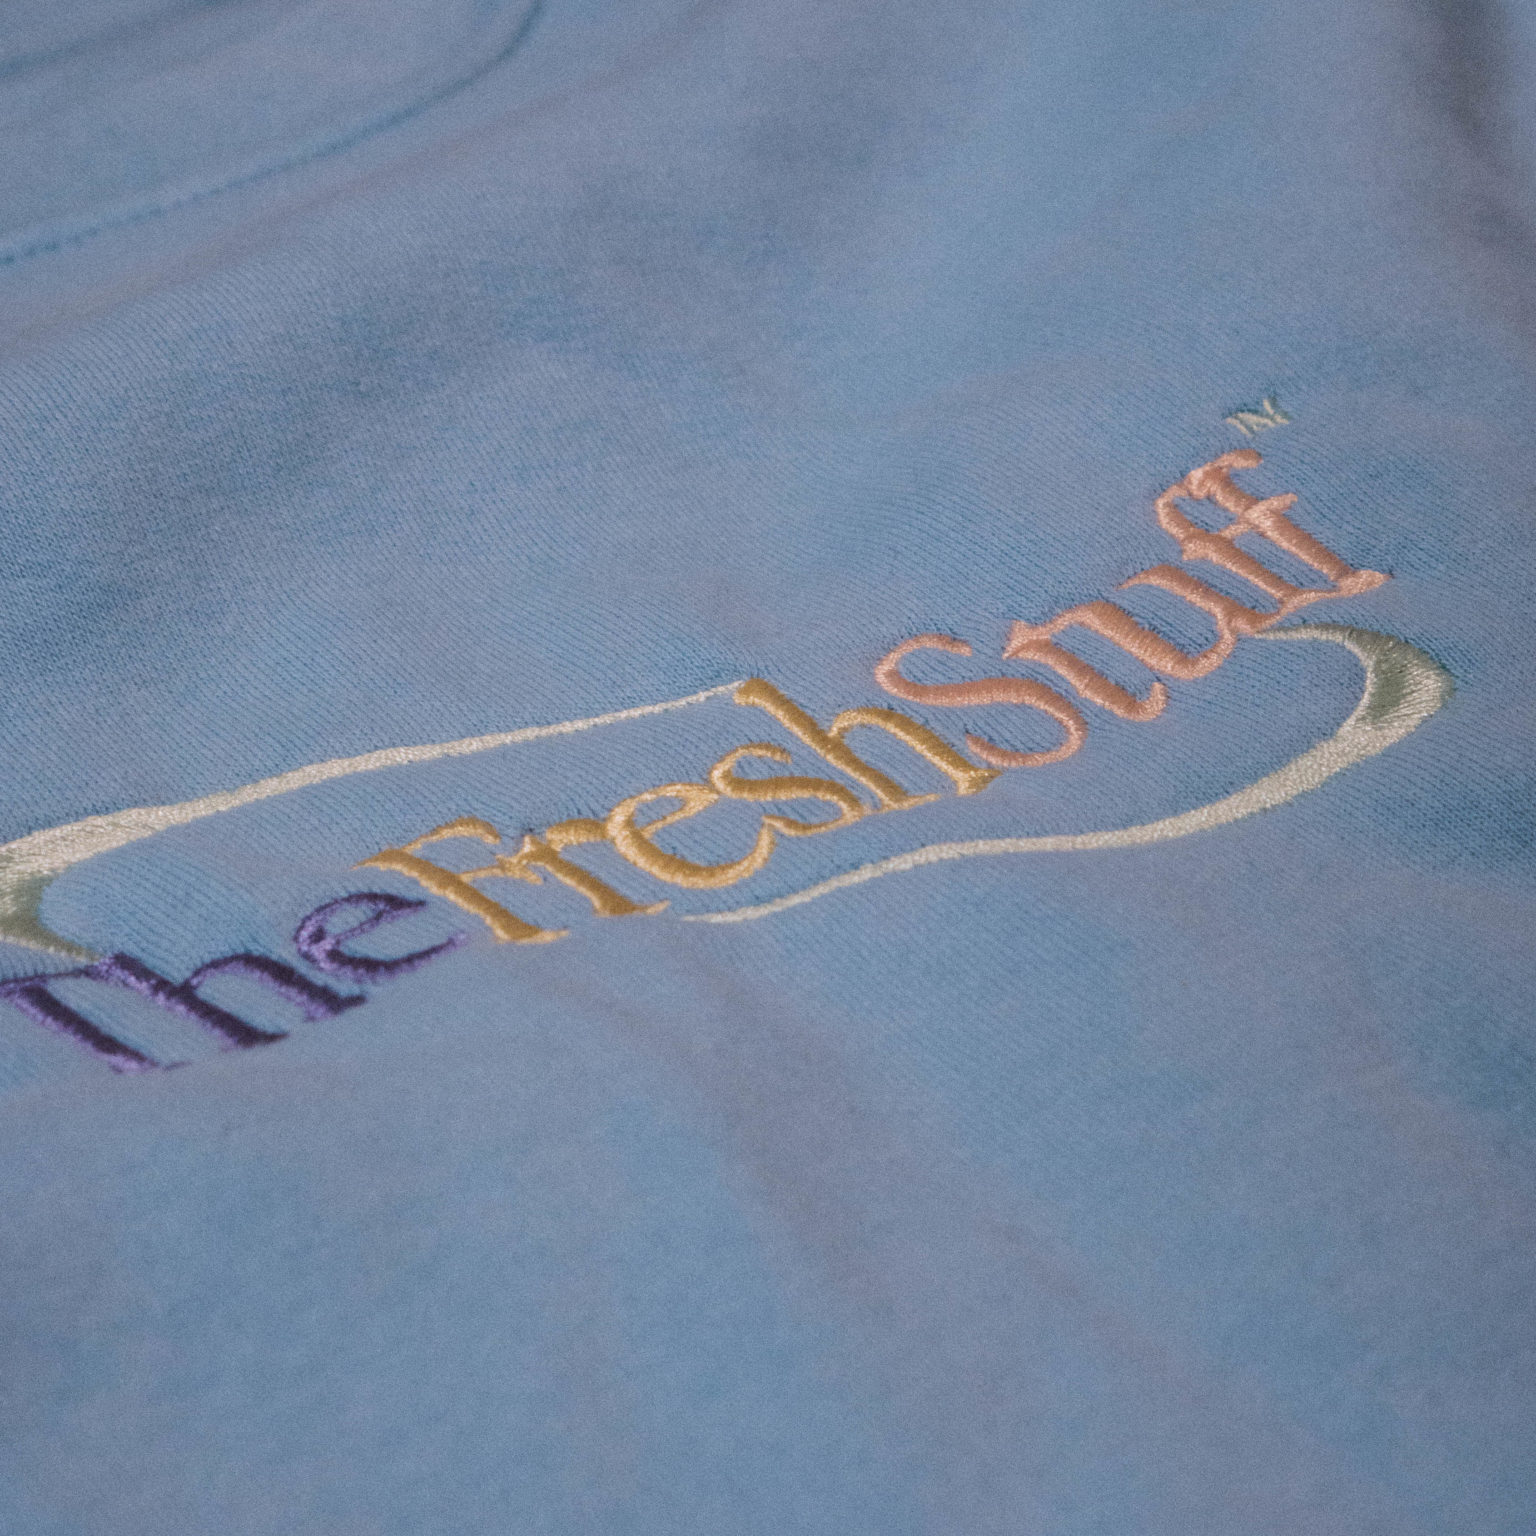 The Fresh Stuff - Retro Logo Unisex Embroidered Premium Heavy Sweater (Serene Blue)